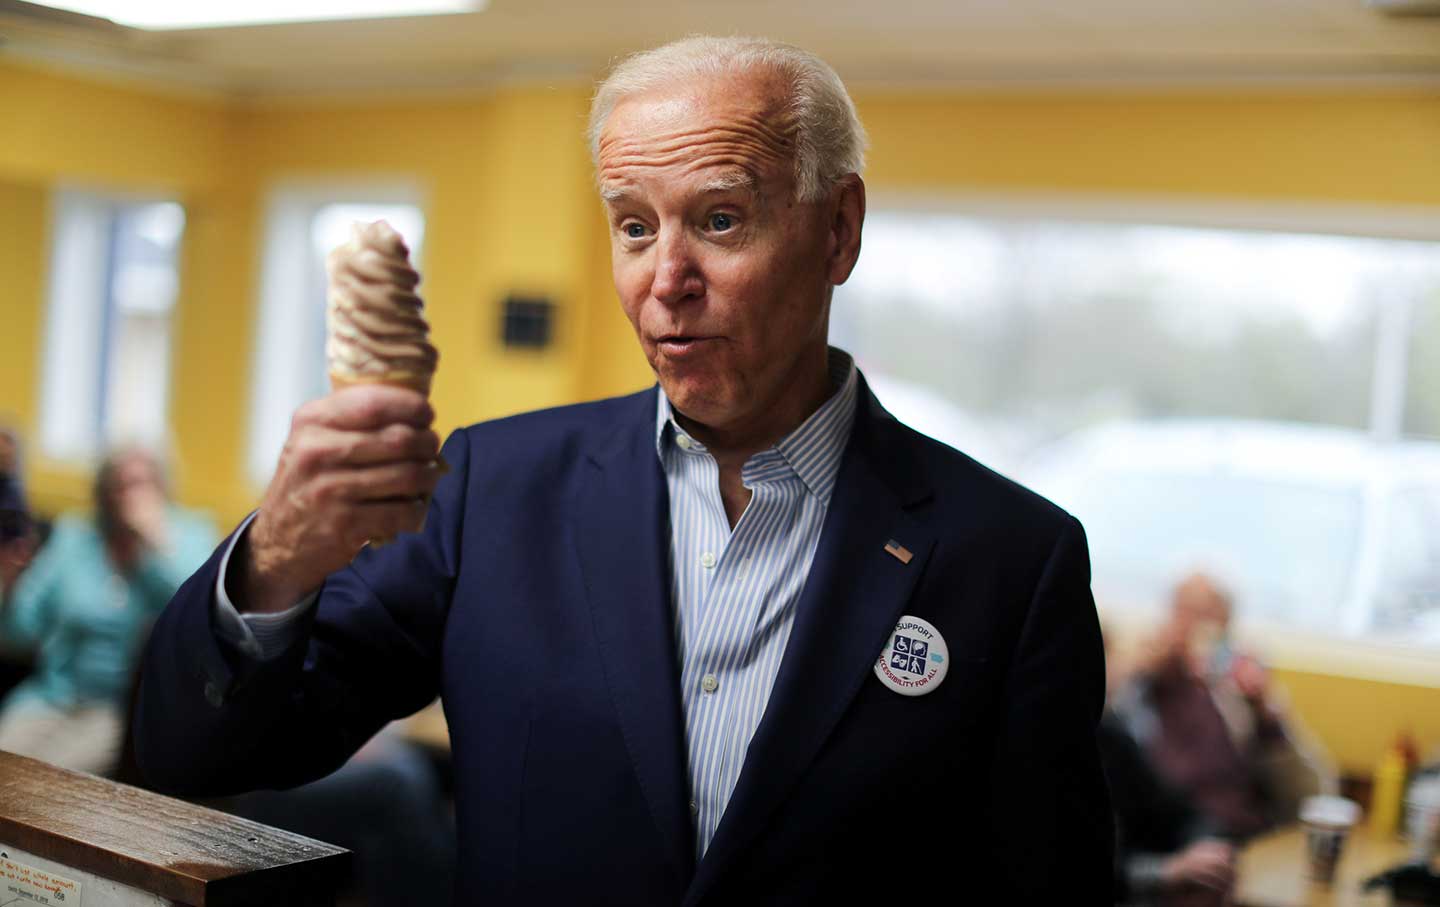 Joe Biden with ice cream